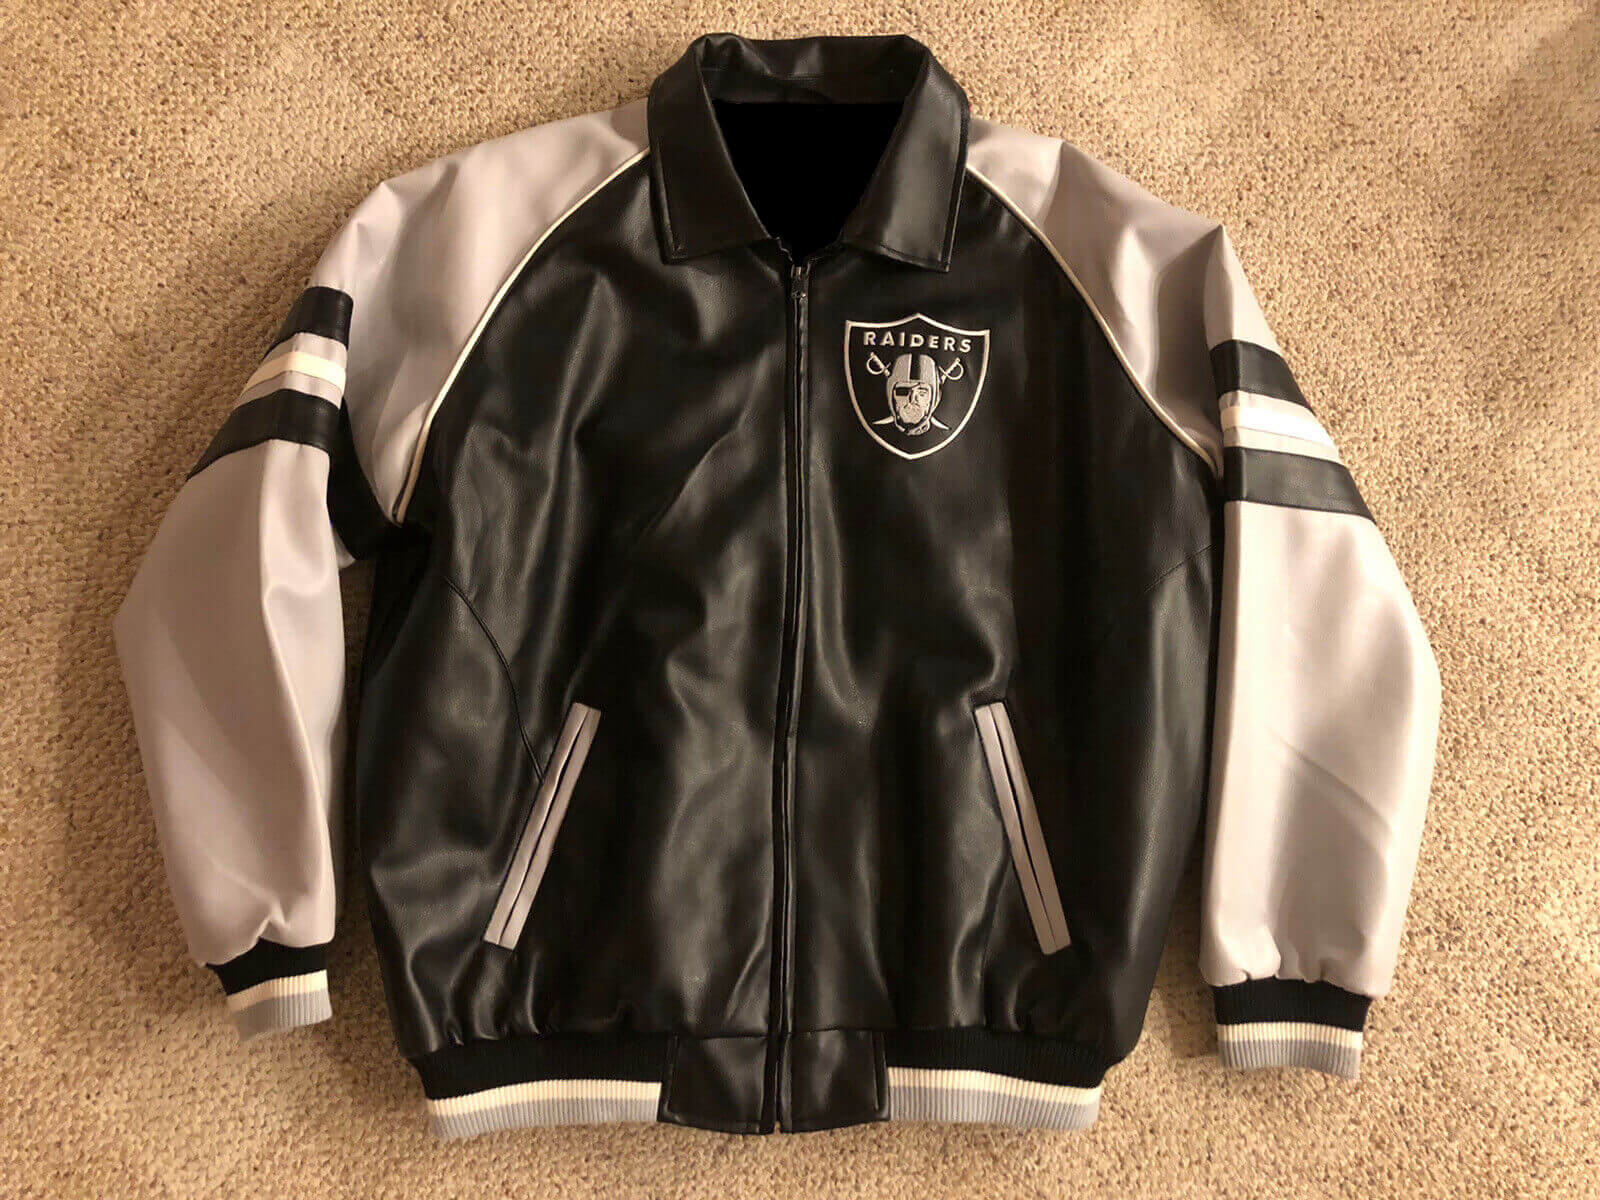 Maker of Jacket Fashion Jackets Vintage G-III Oakland Raiders Football Leather